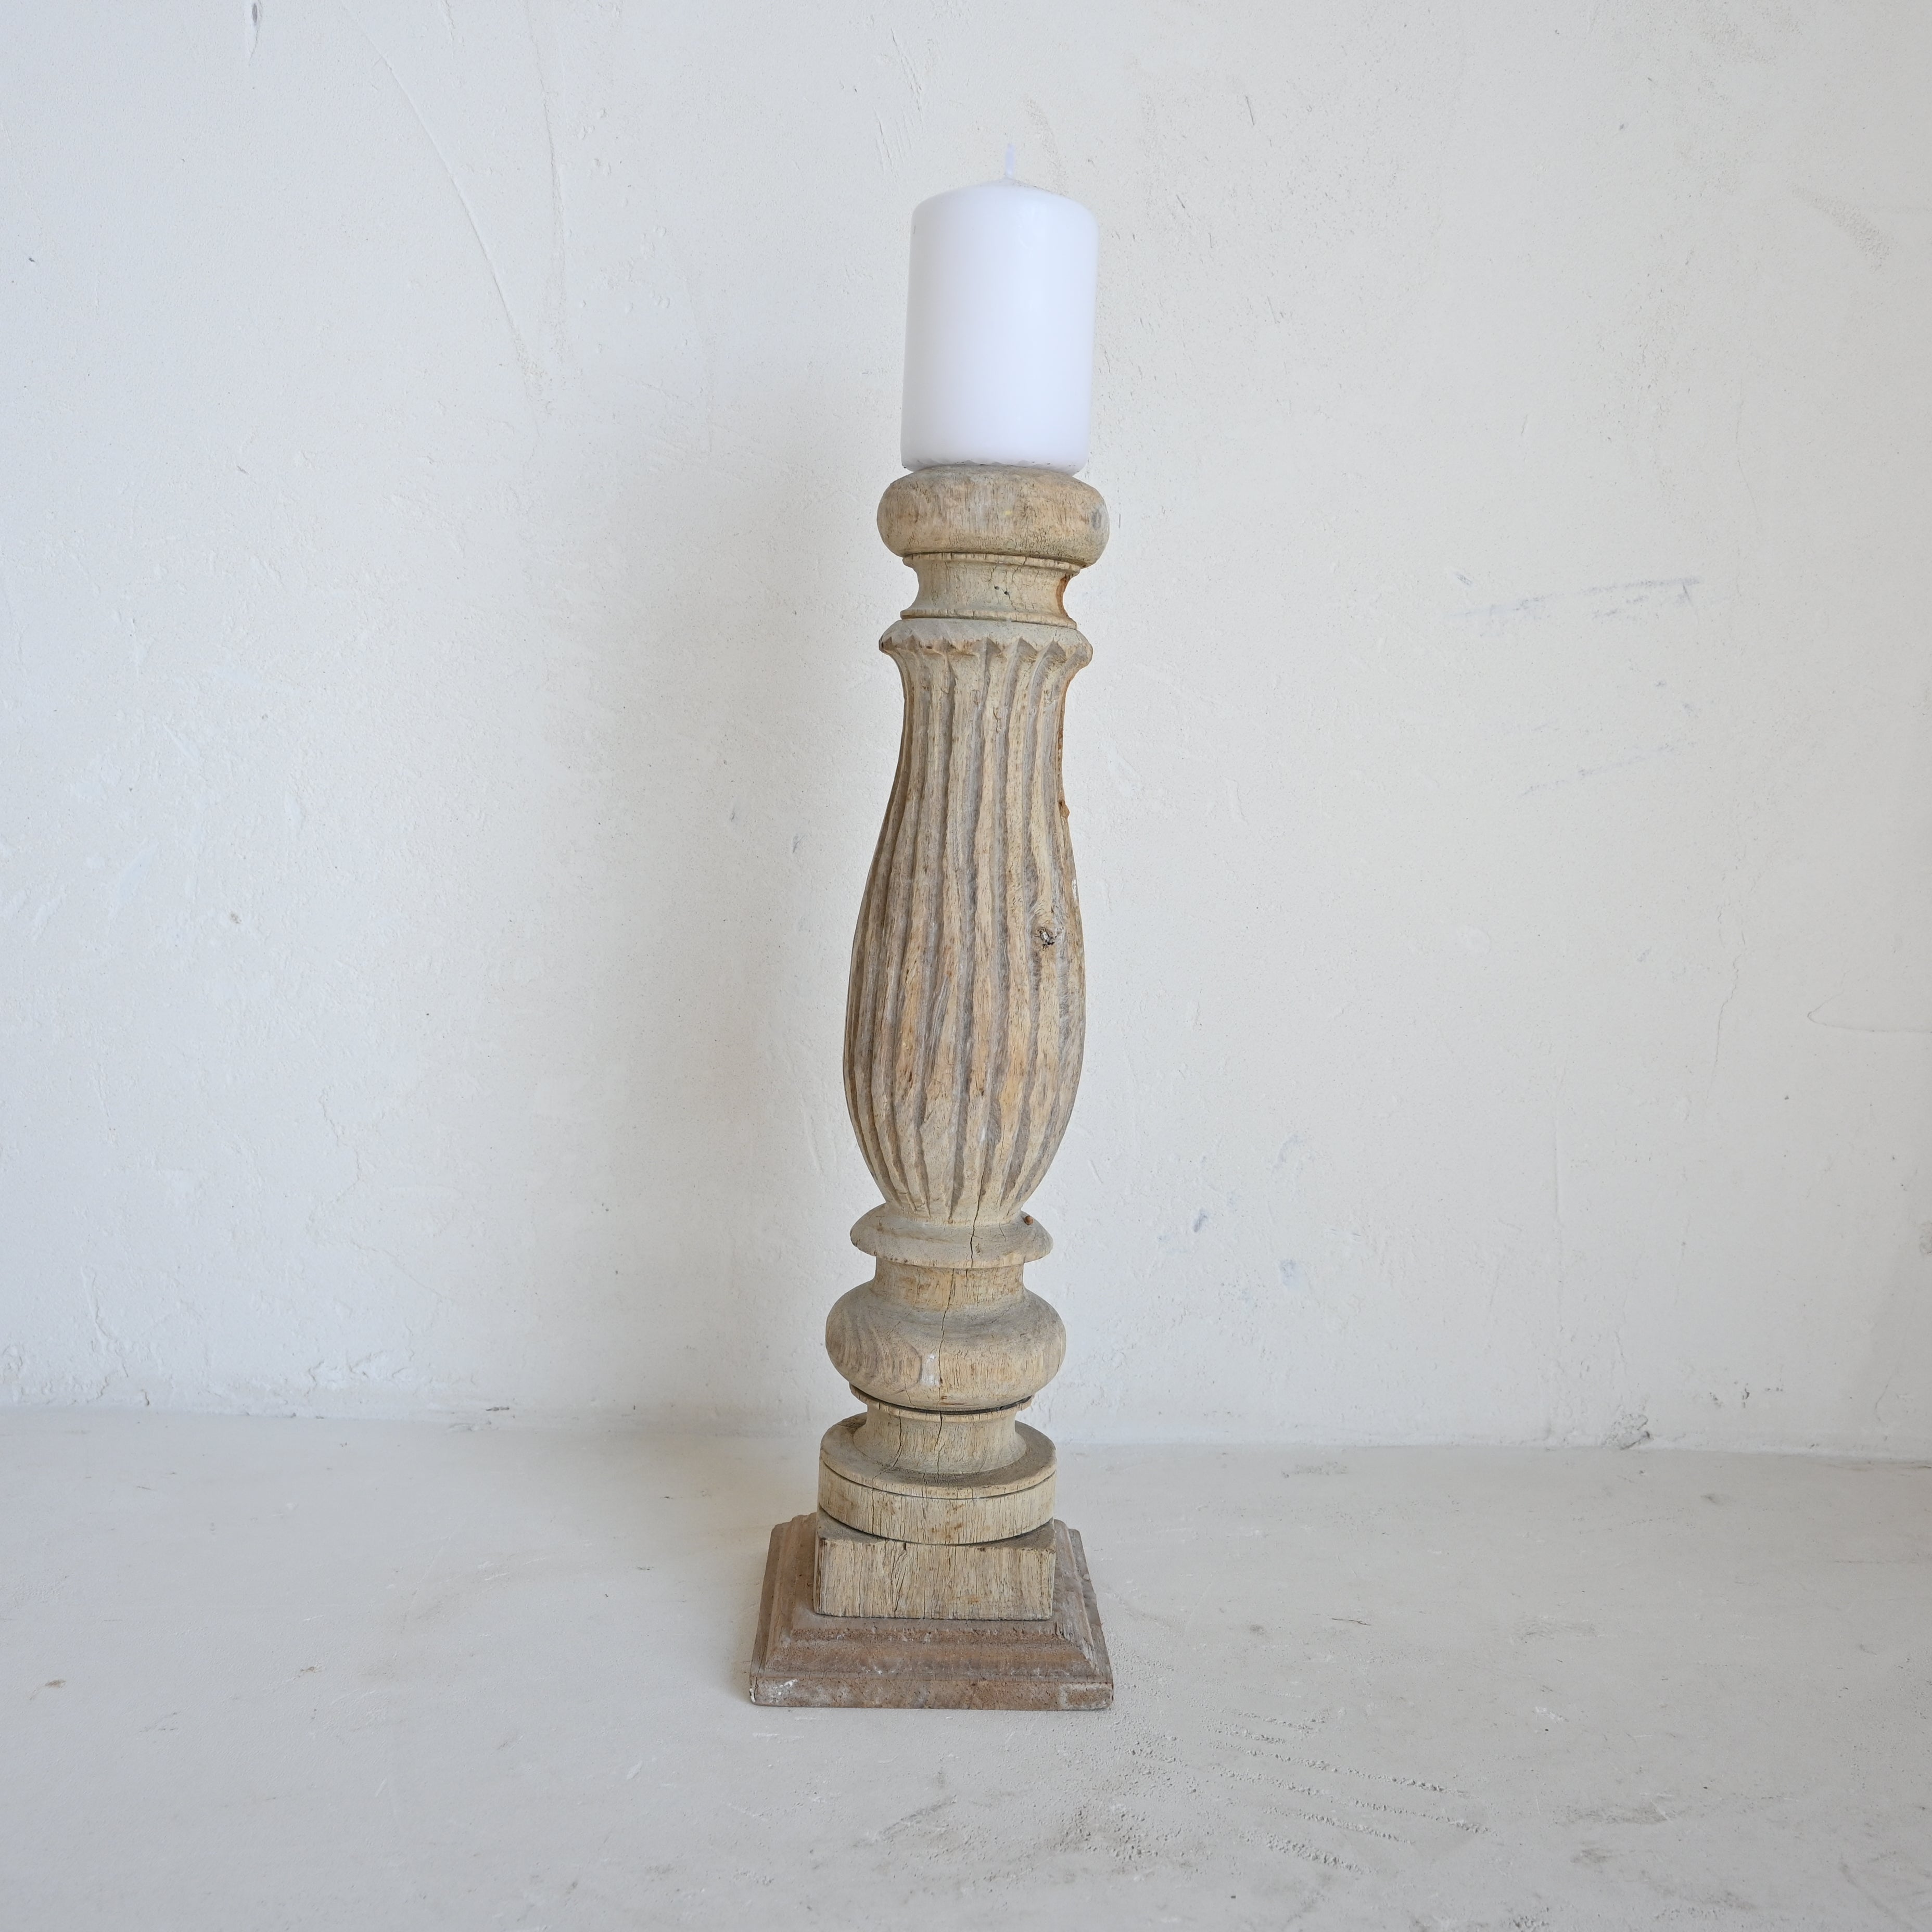 Vintage Indian table leg candle holder 03